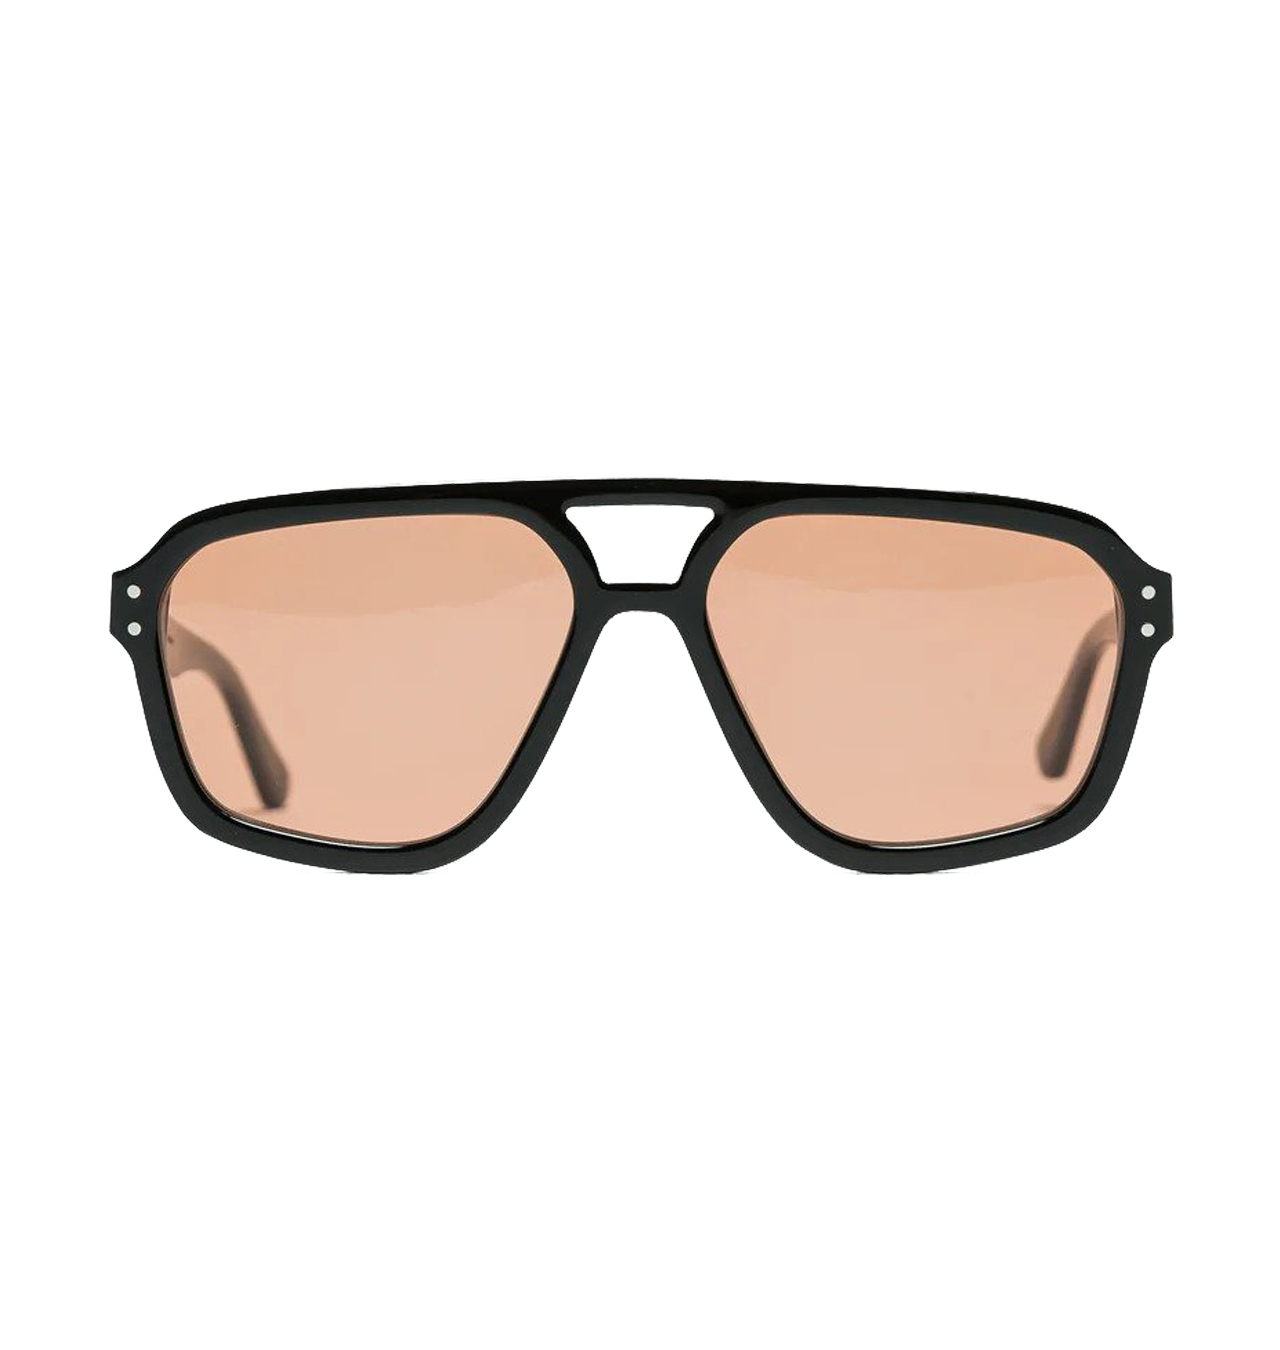 Monokel Eyewear - Jet Black Sunglasses - Orange Solid Lens